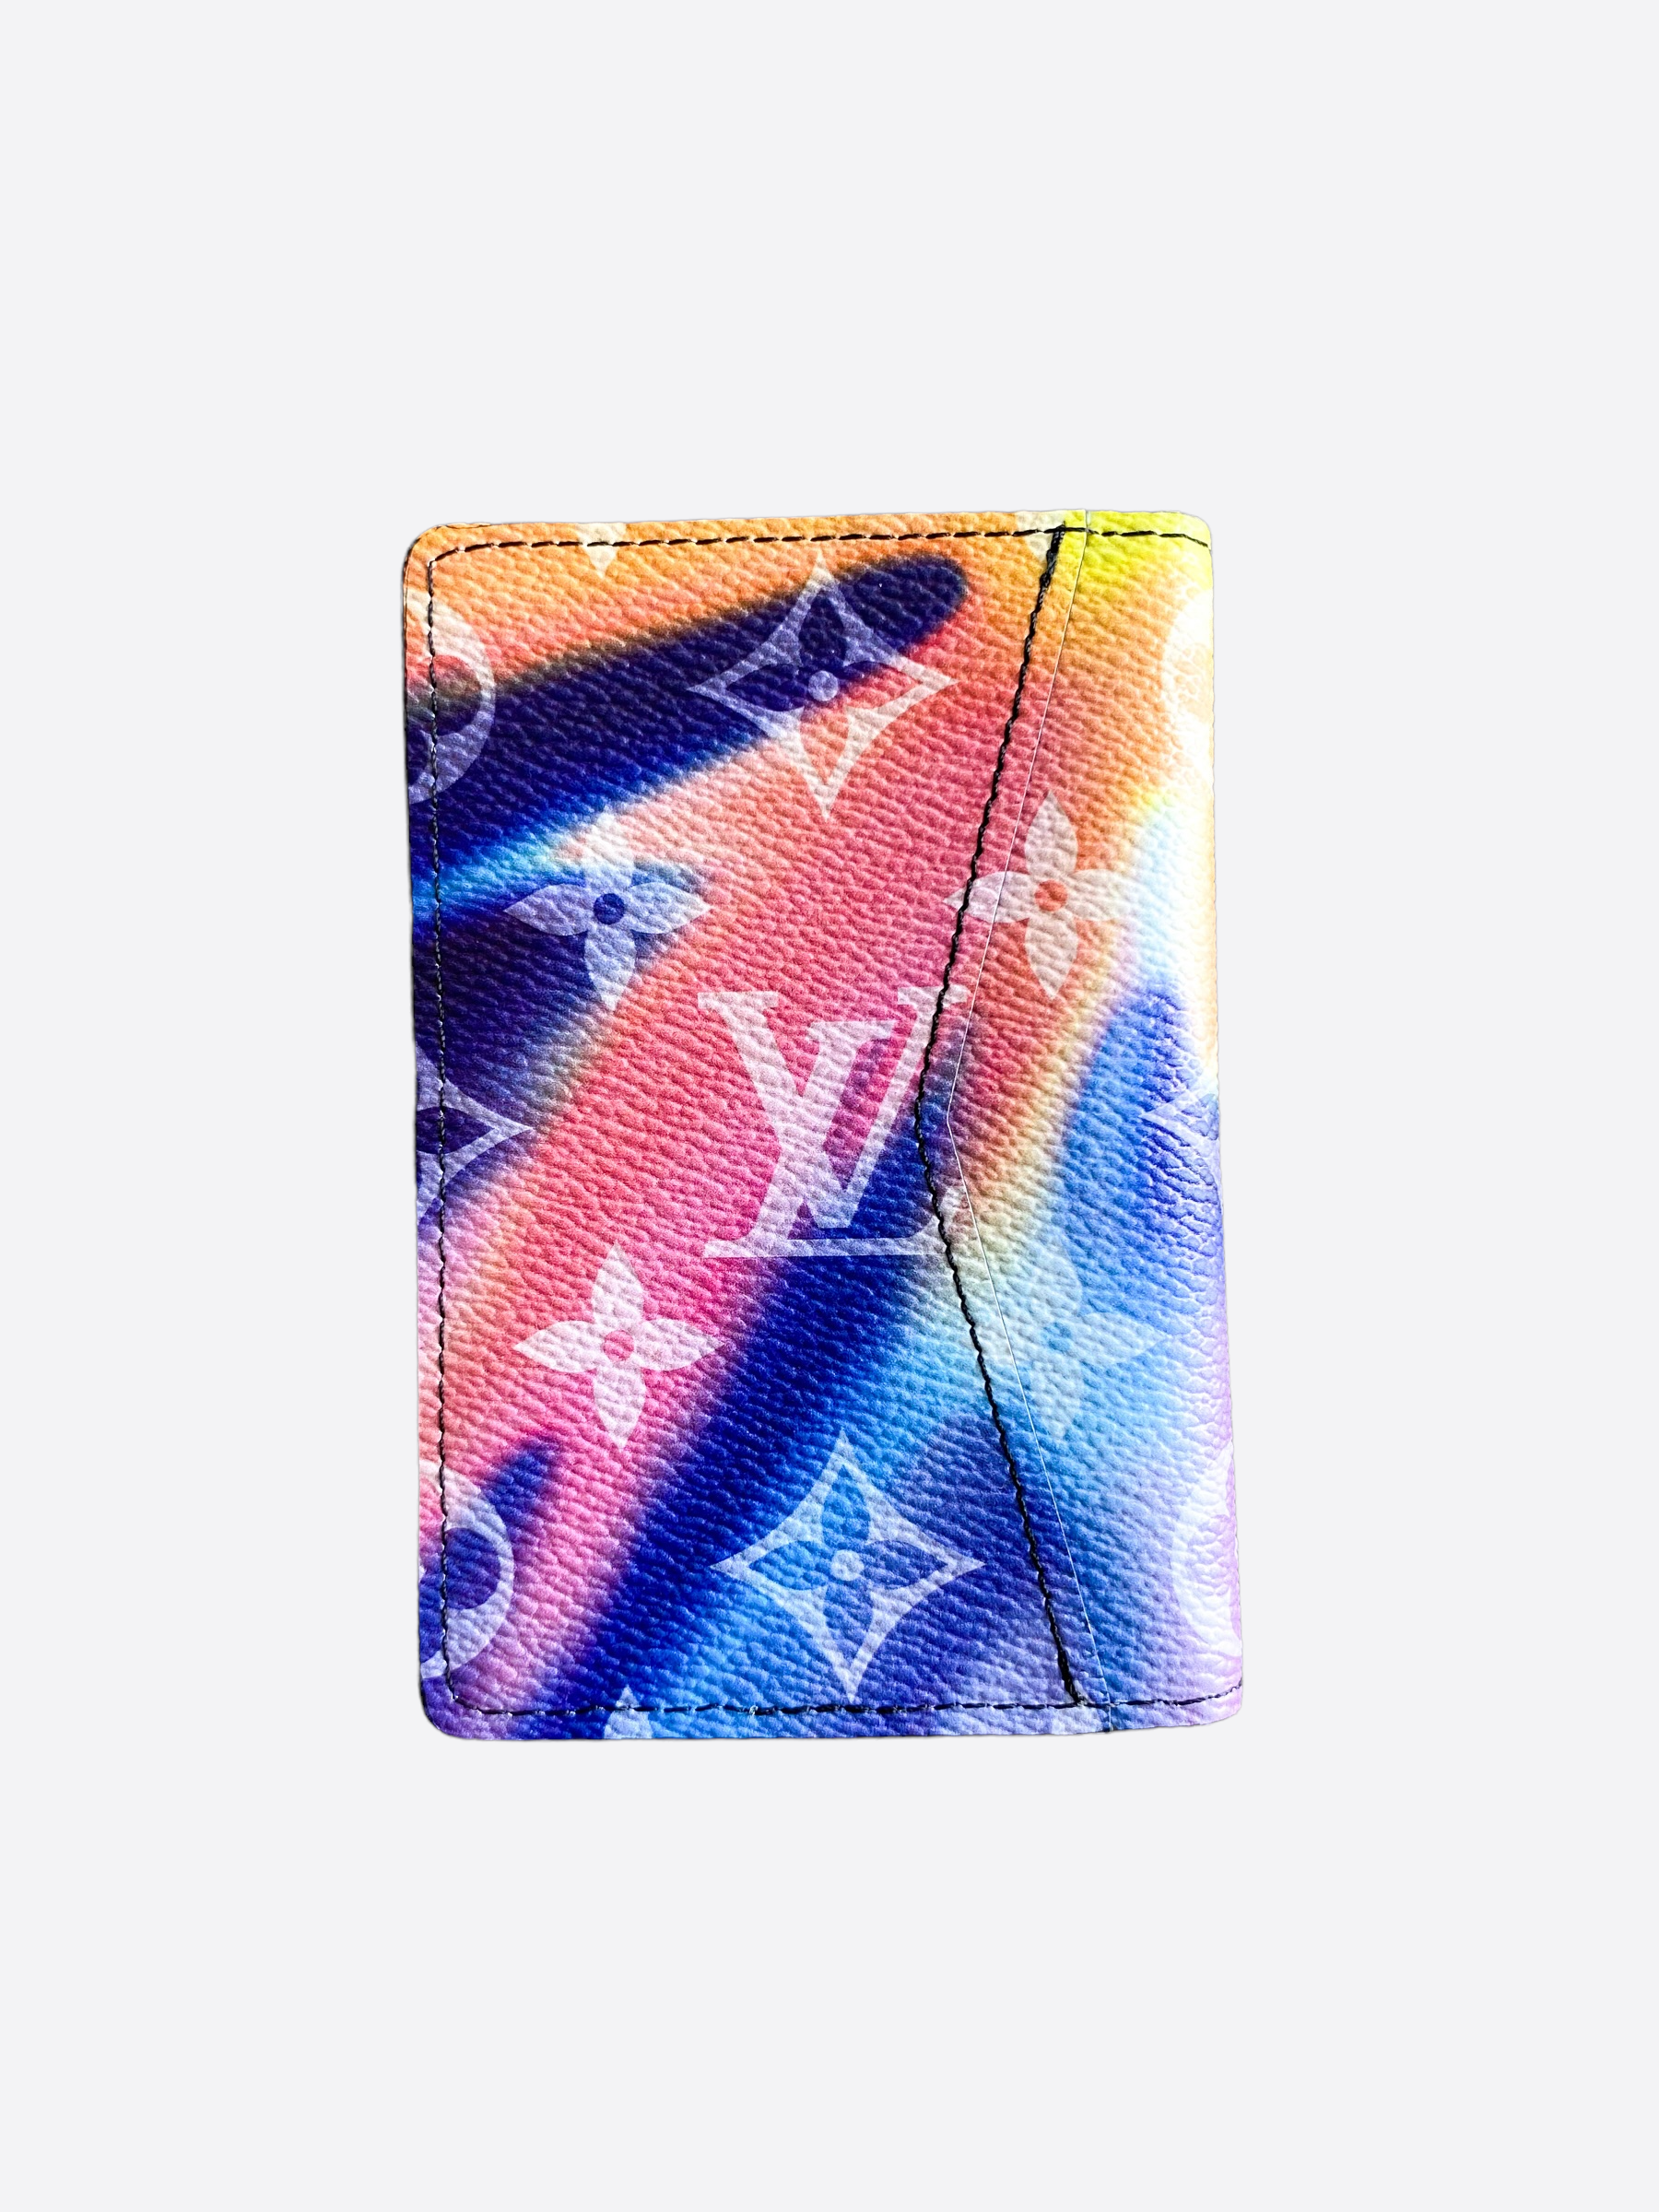 Louis Vuitton Sunset Monogram Pocket Organizer